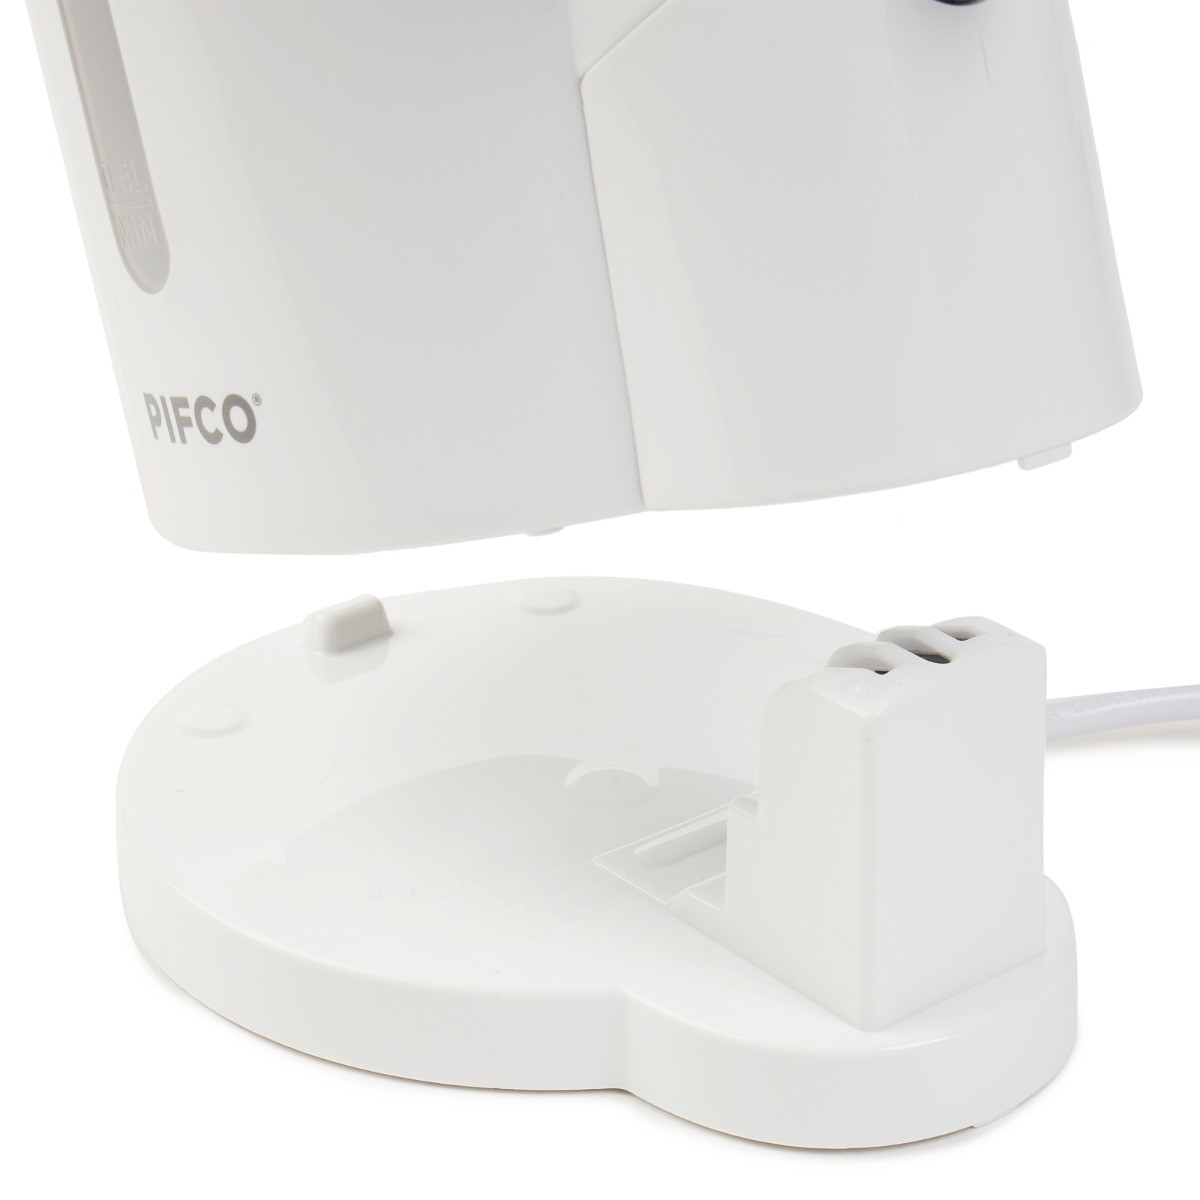 PIFCO Essentials Kettle, 1.7L - White>